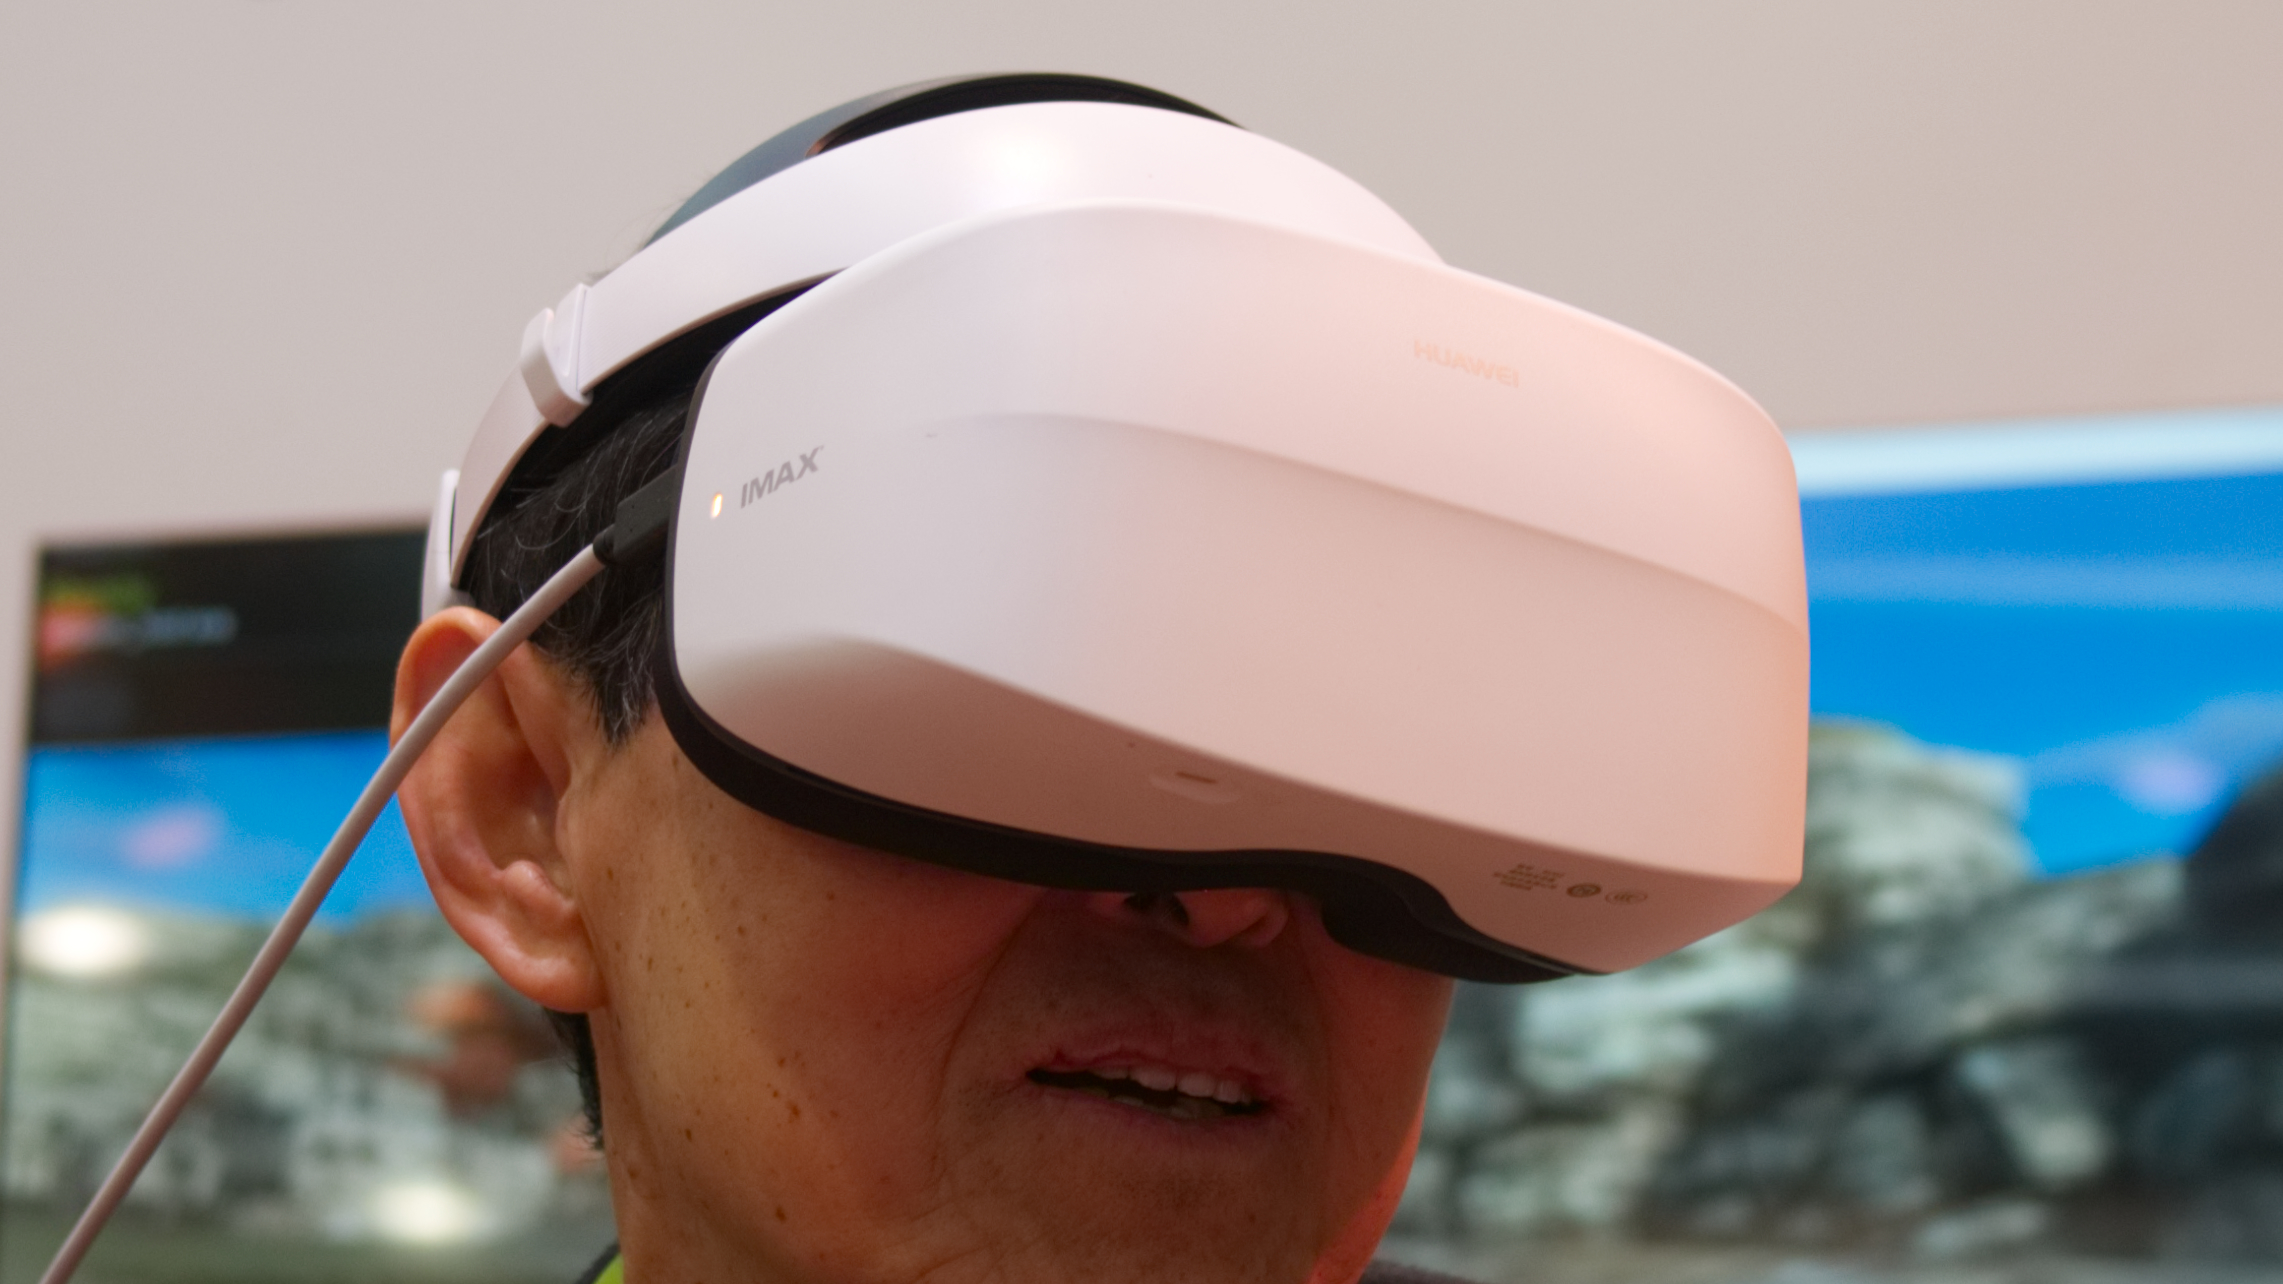 Huawei VR2